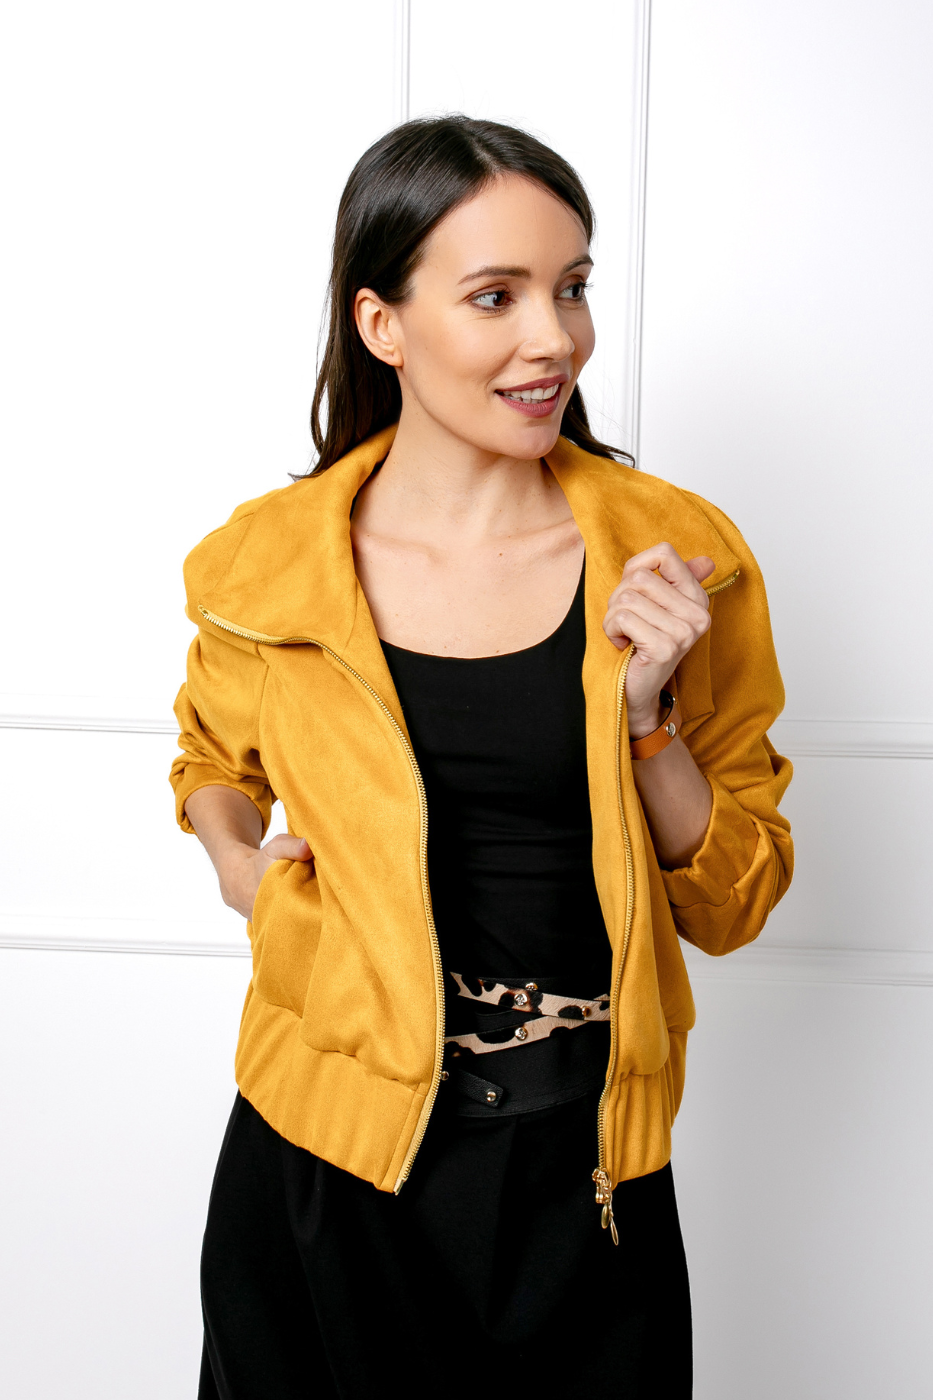 Gent jacket - mustard yellow